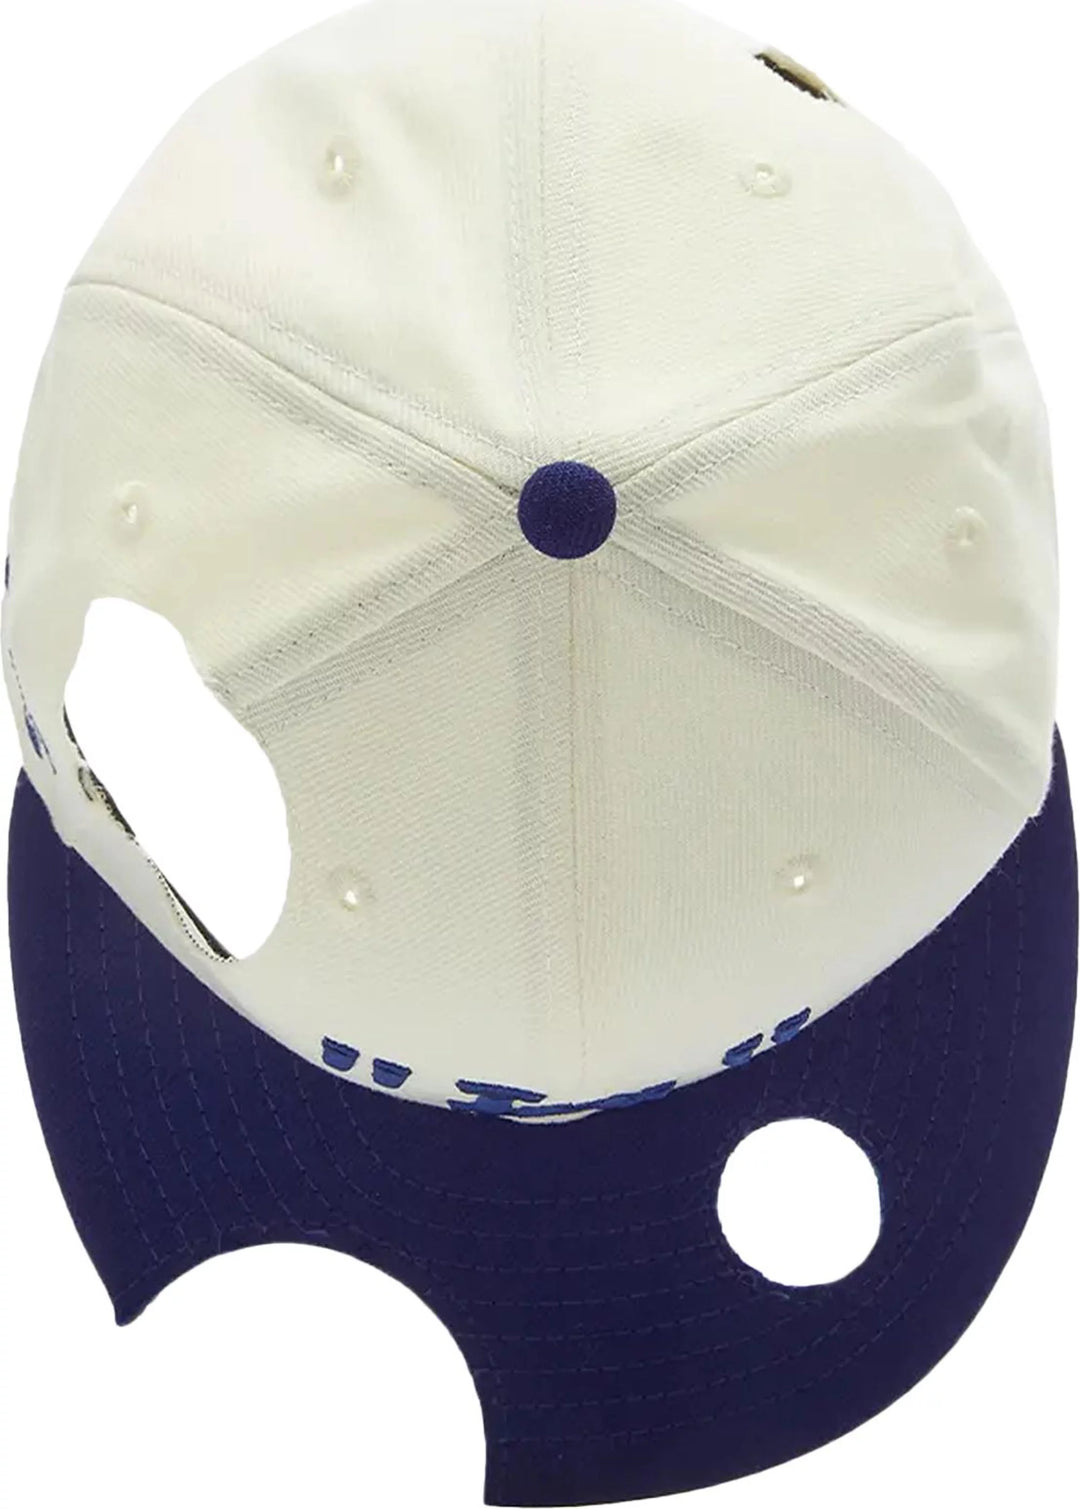 Off-White x Dodgers Baseball Cap